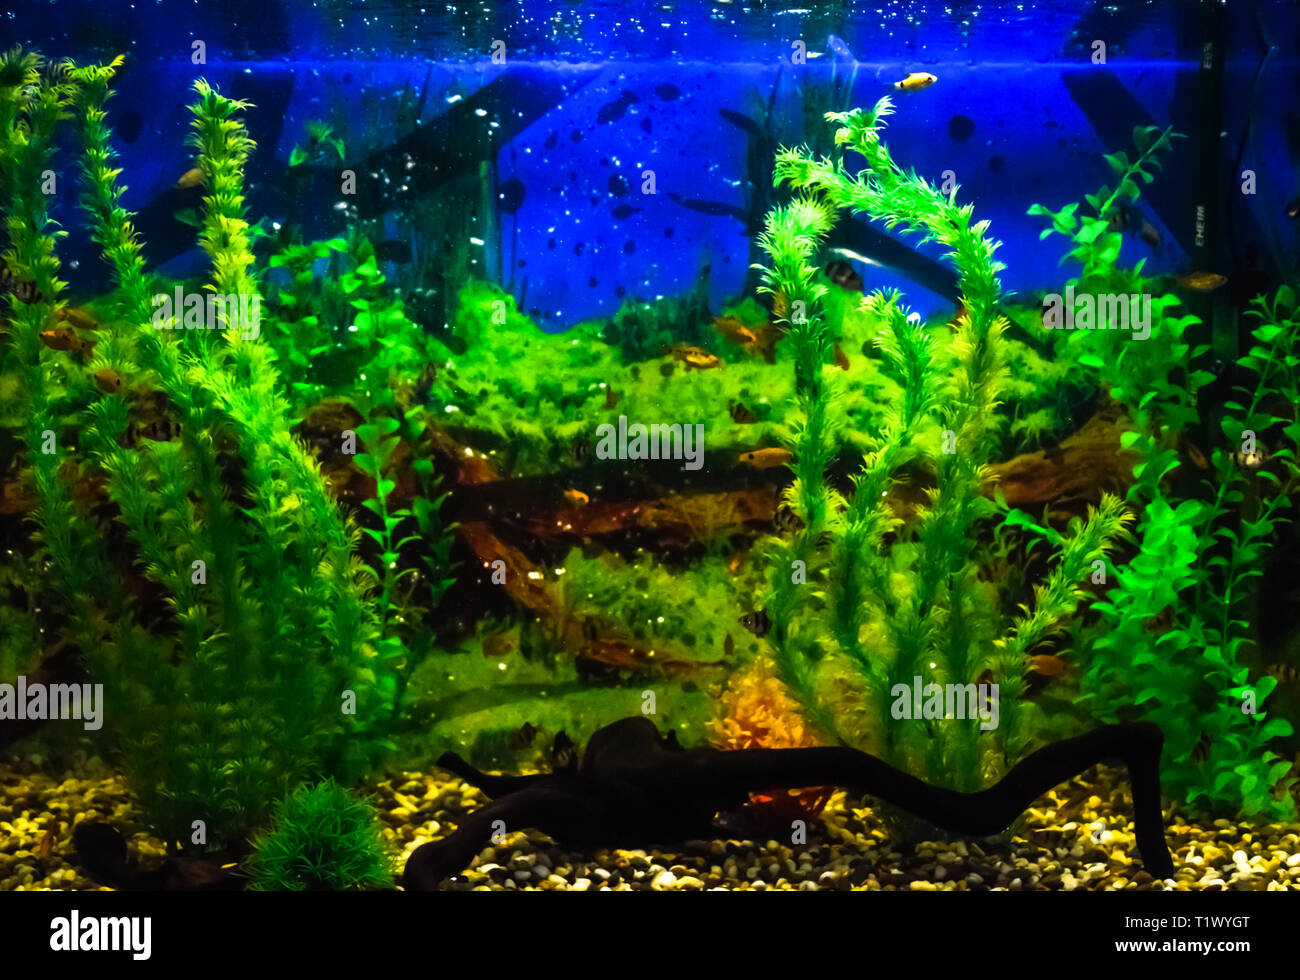 Wall mounted aquarium with tropical fish and algae. Stock Photo